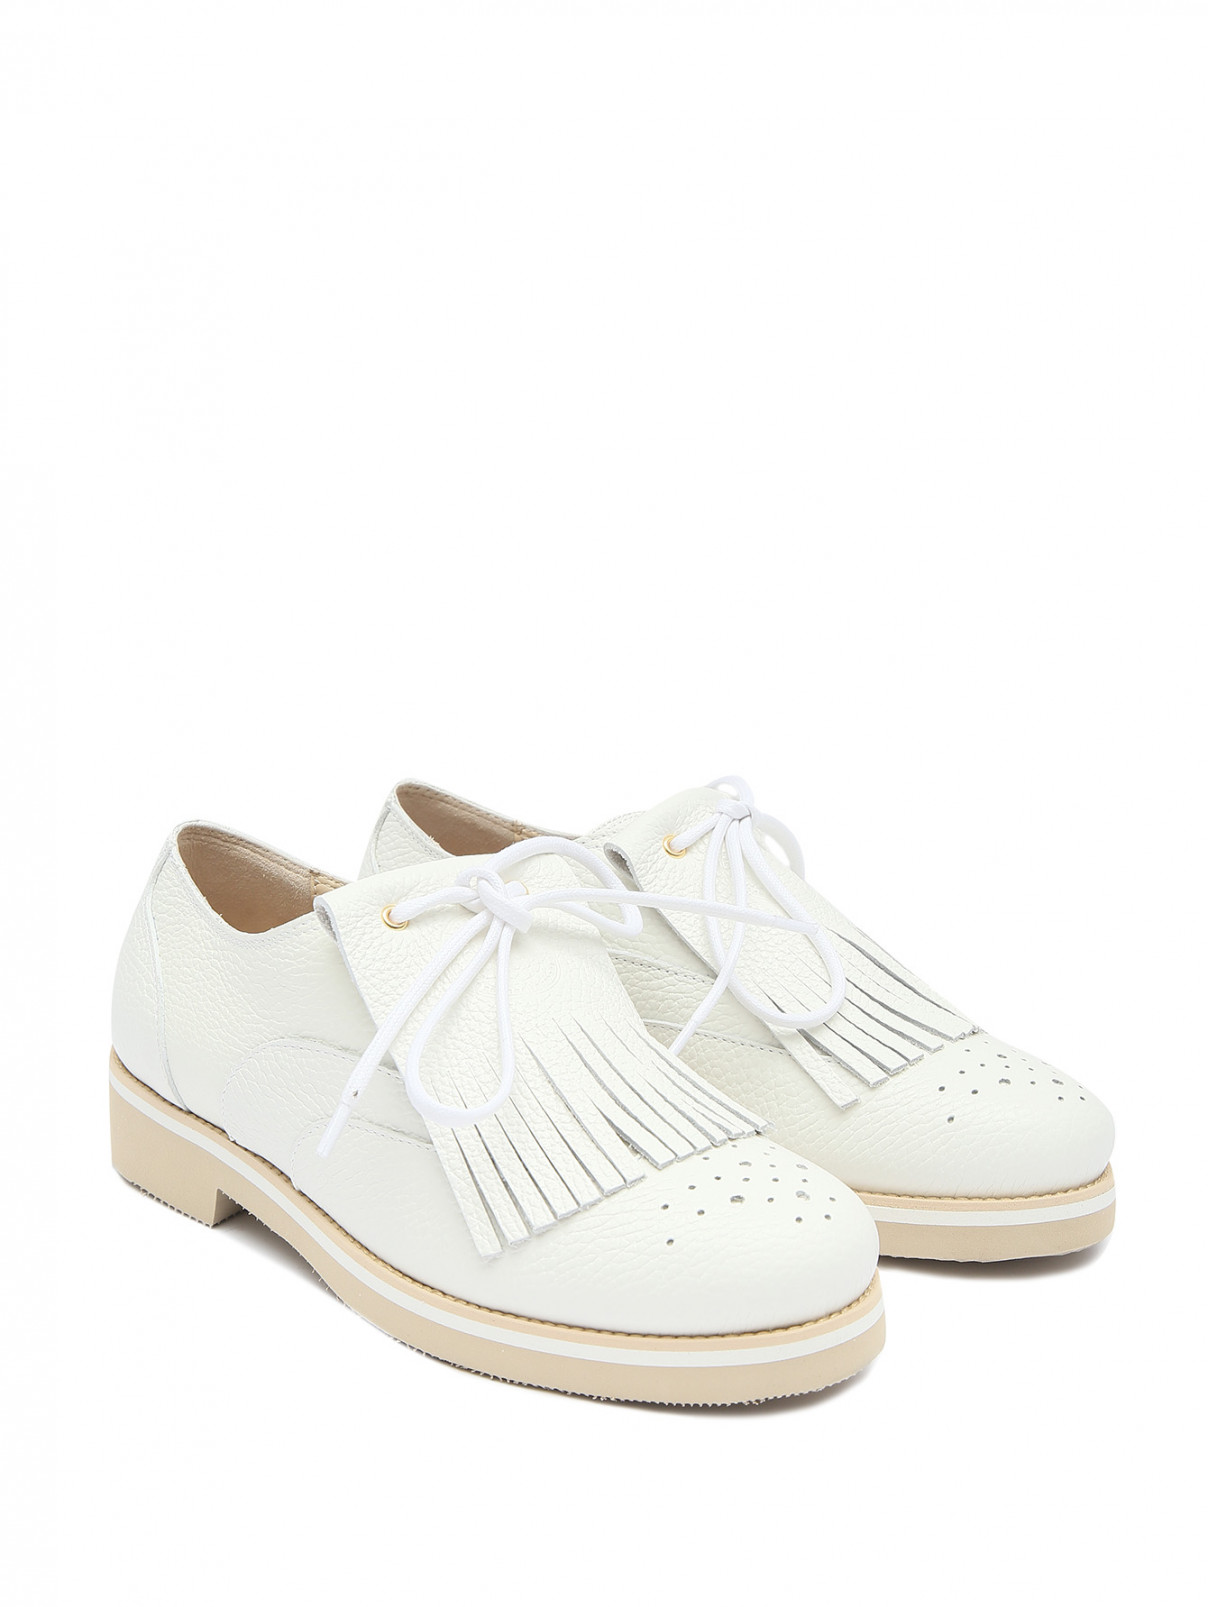 Ботинки из кожи на шнурках Marina Rinaldi  –  Общий вид  – Цвет:  Белый